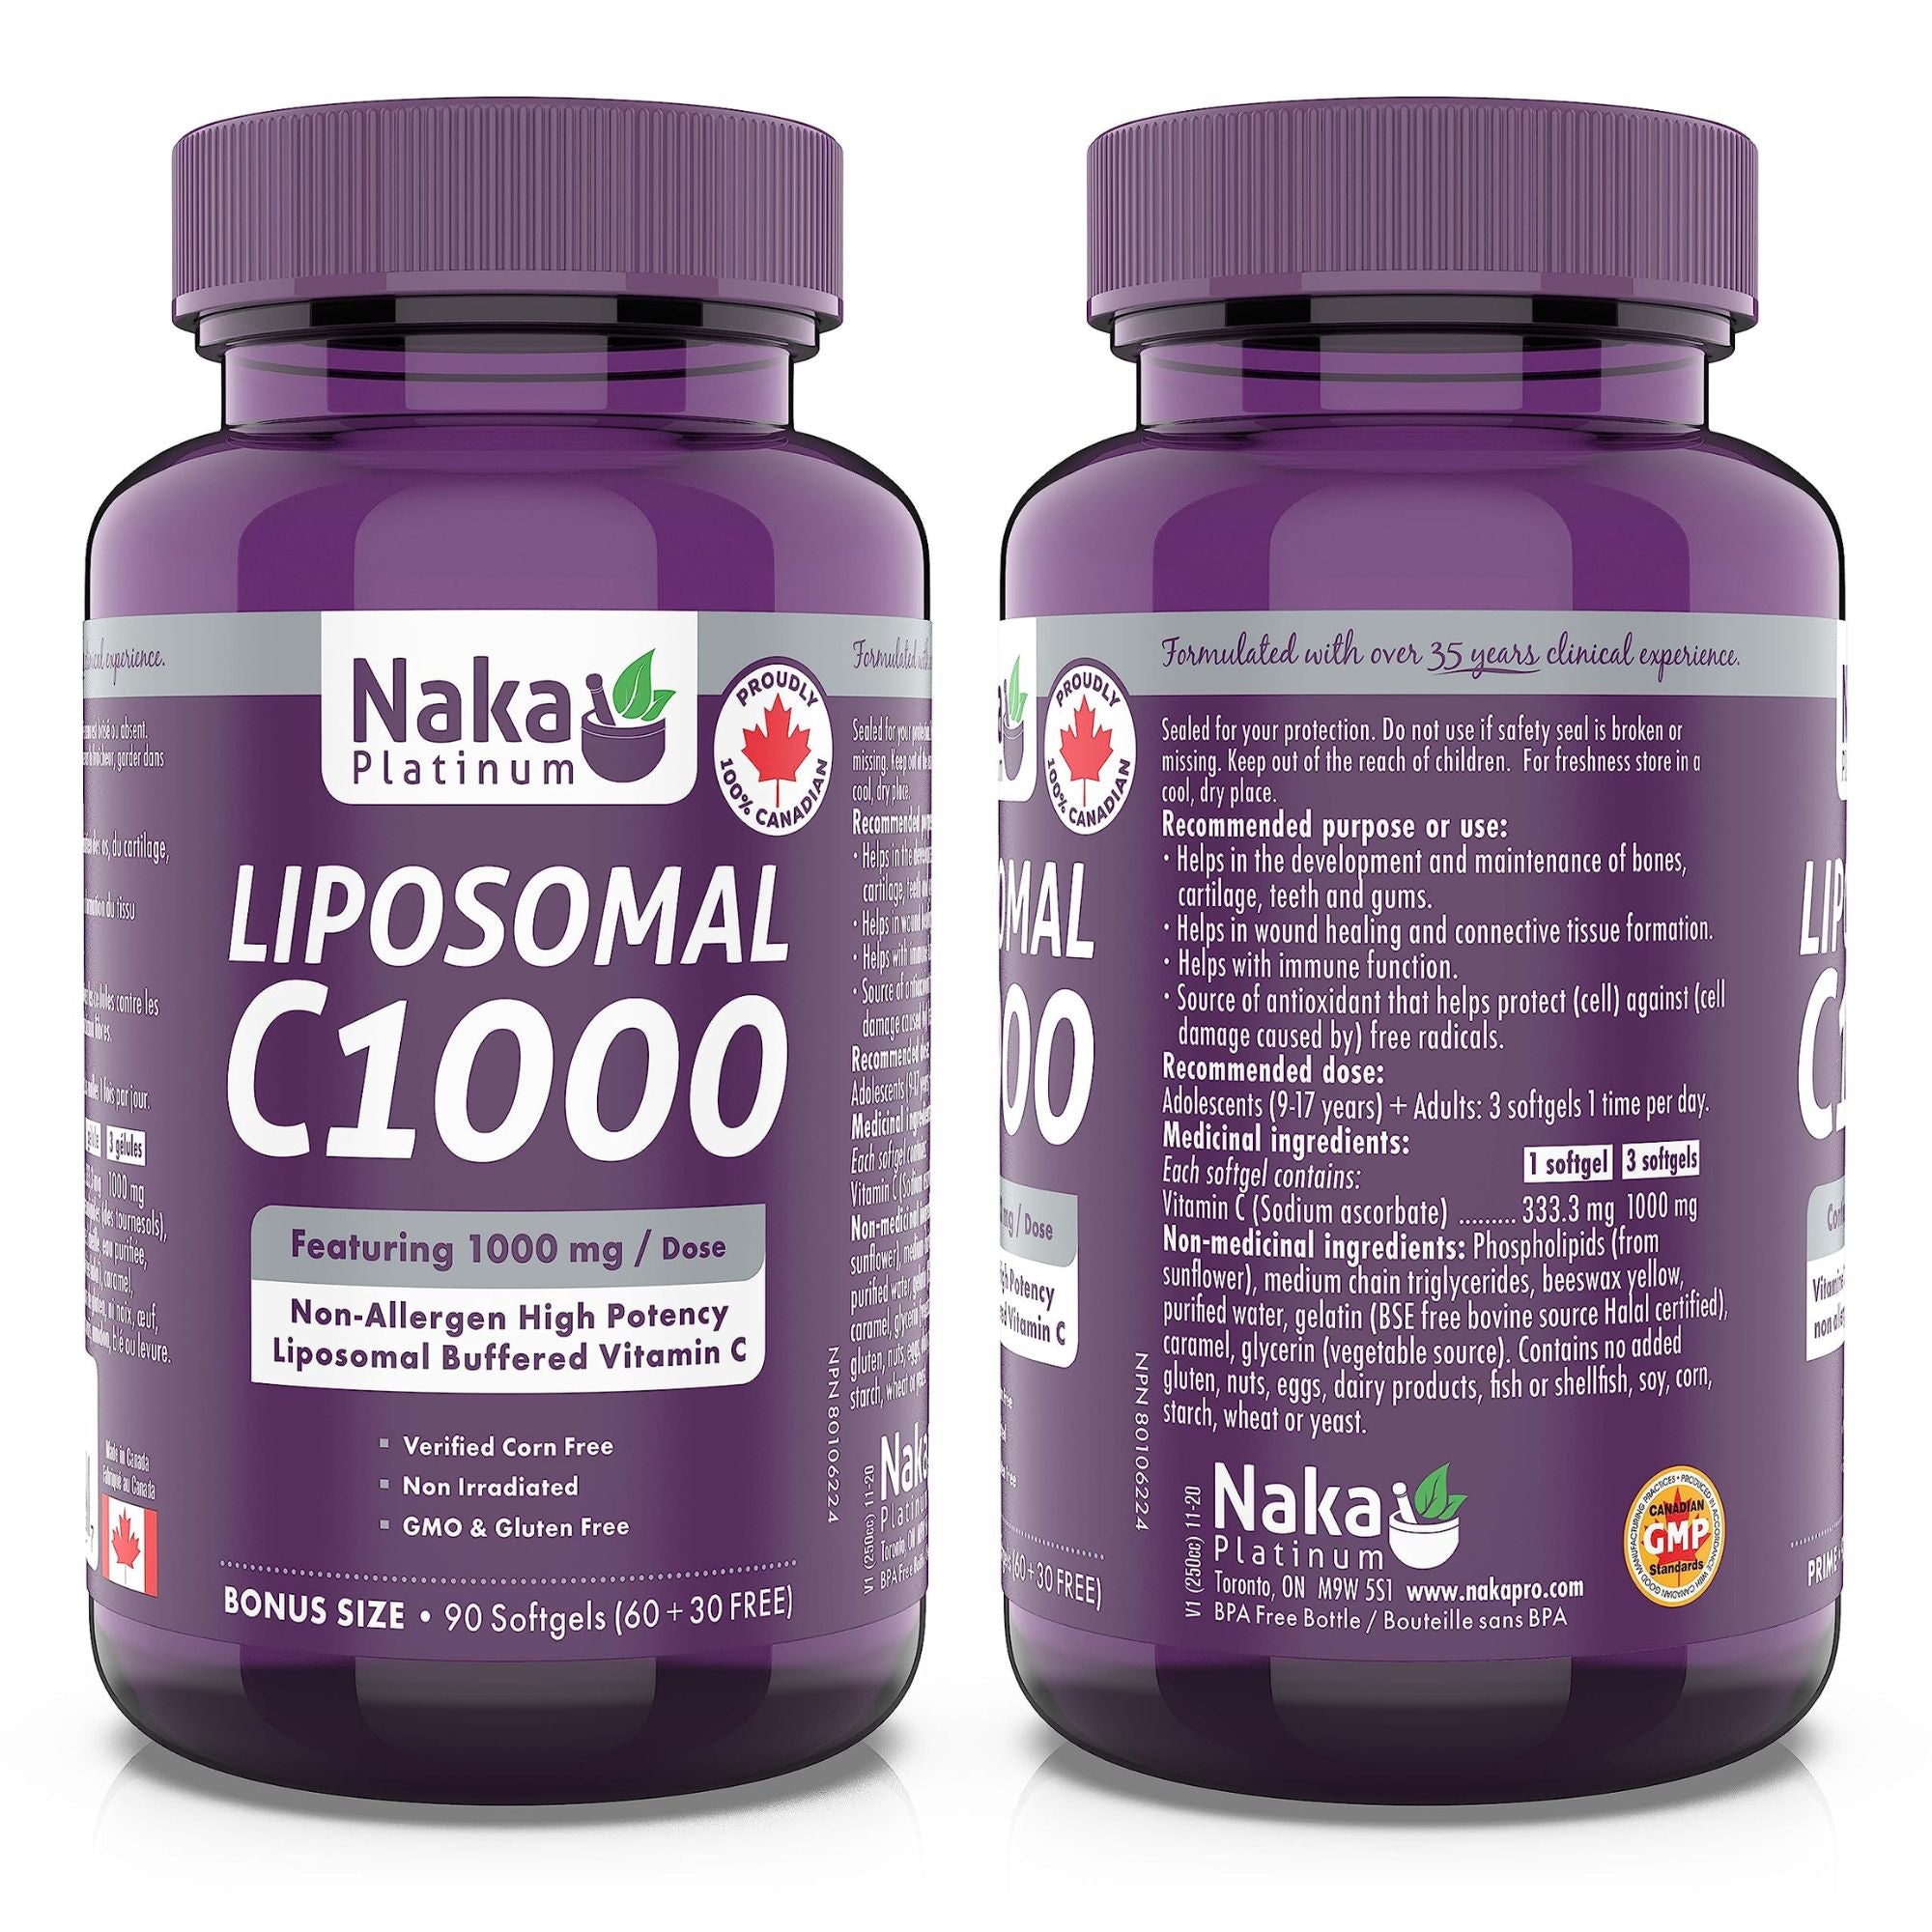 Naka - platinum  liposomal c1000 ultra puissant - 90 gels